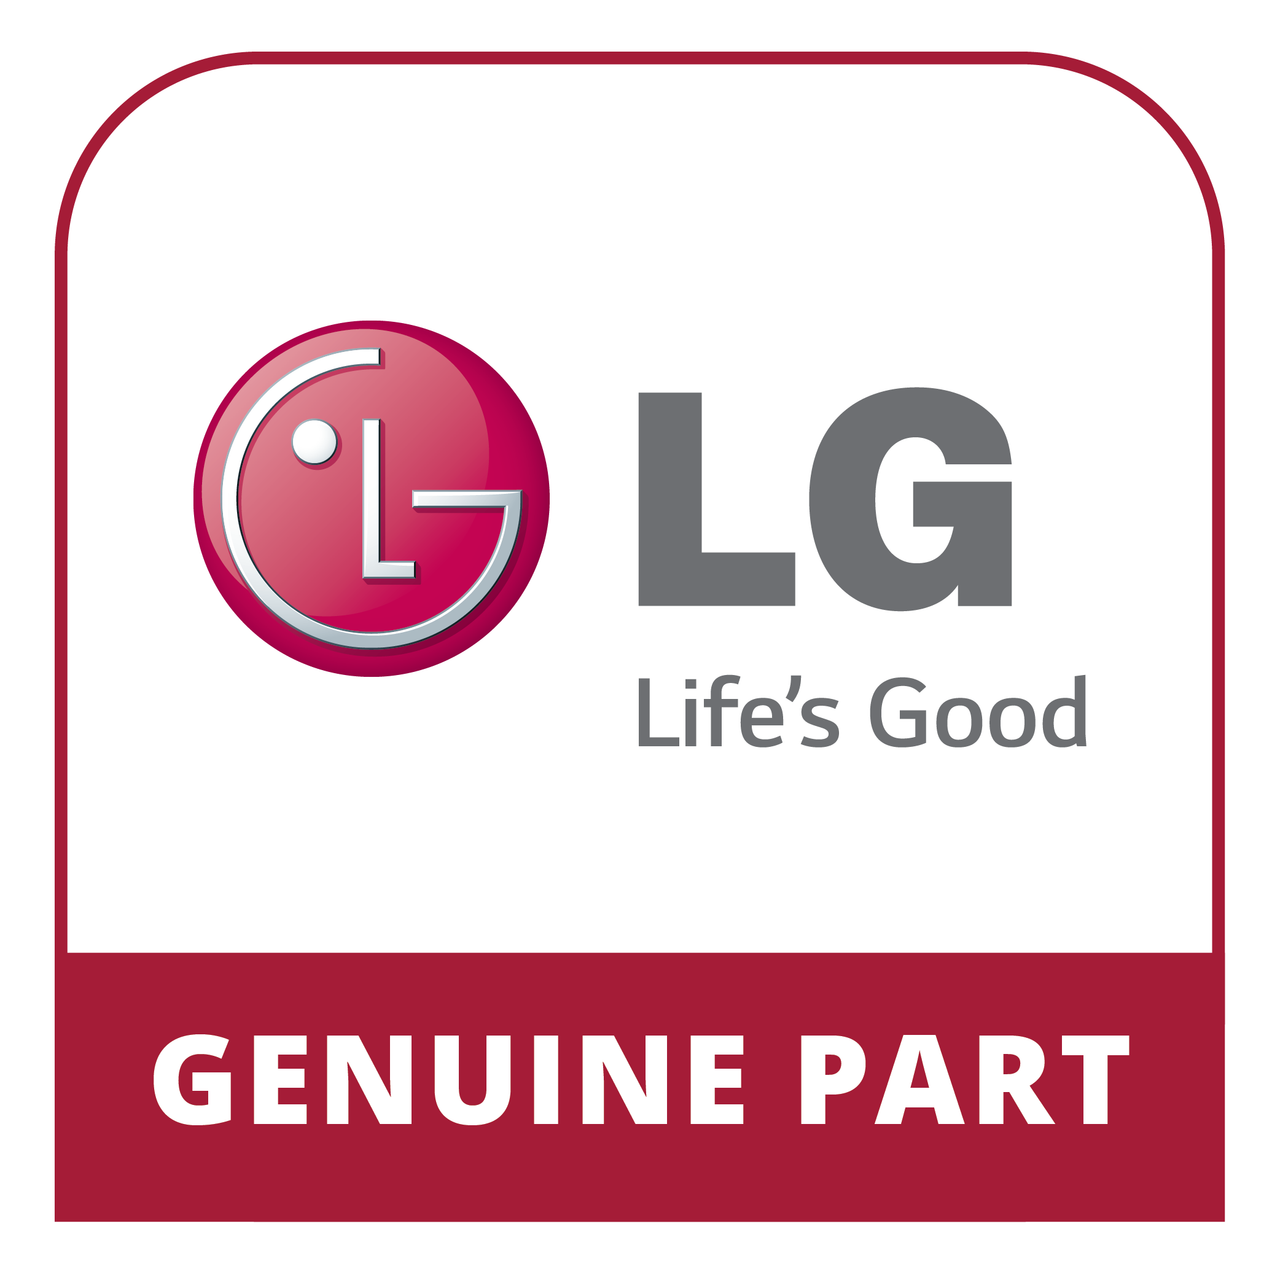 LG MFF63583001 - Link - Genuine LG Part